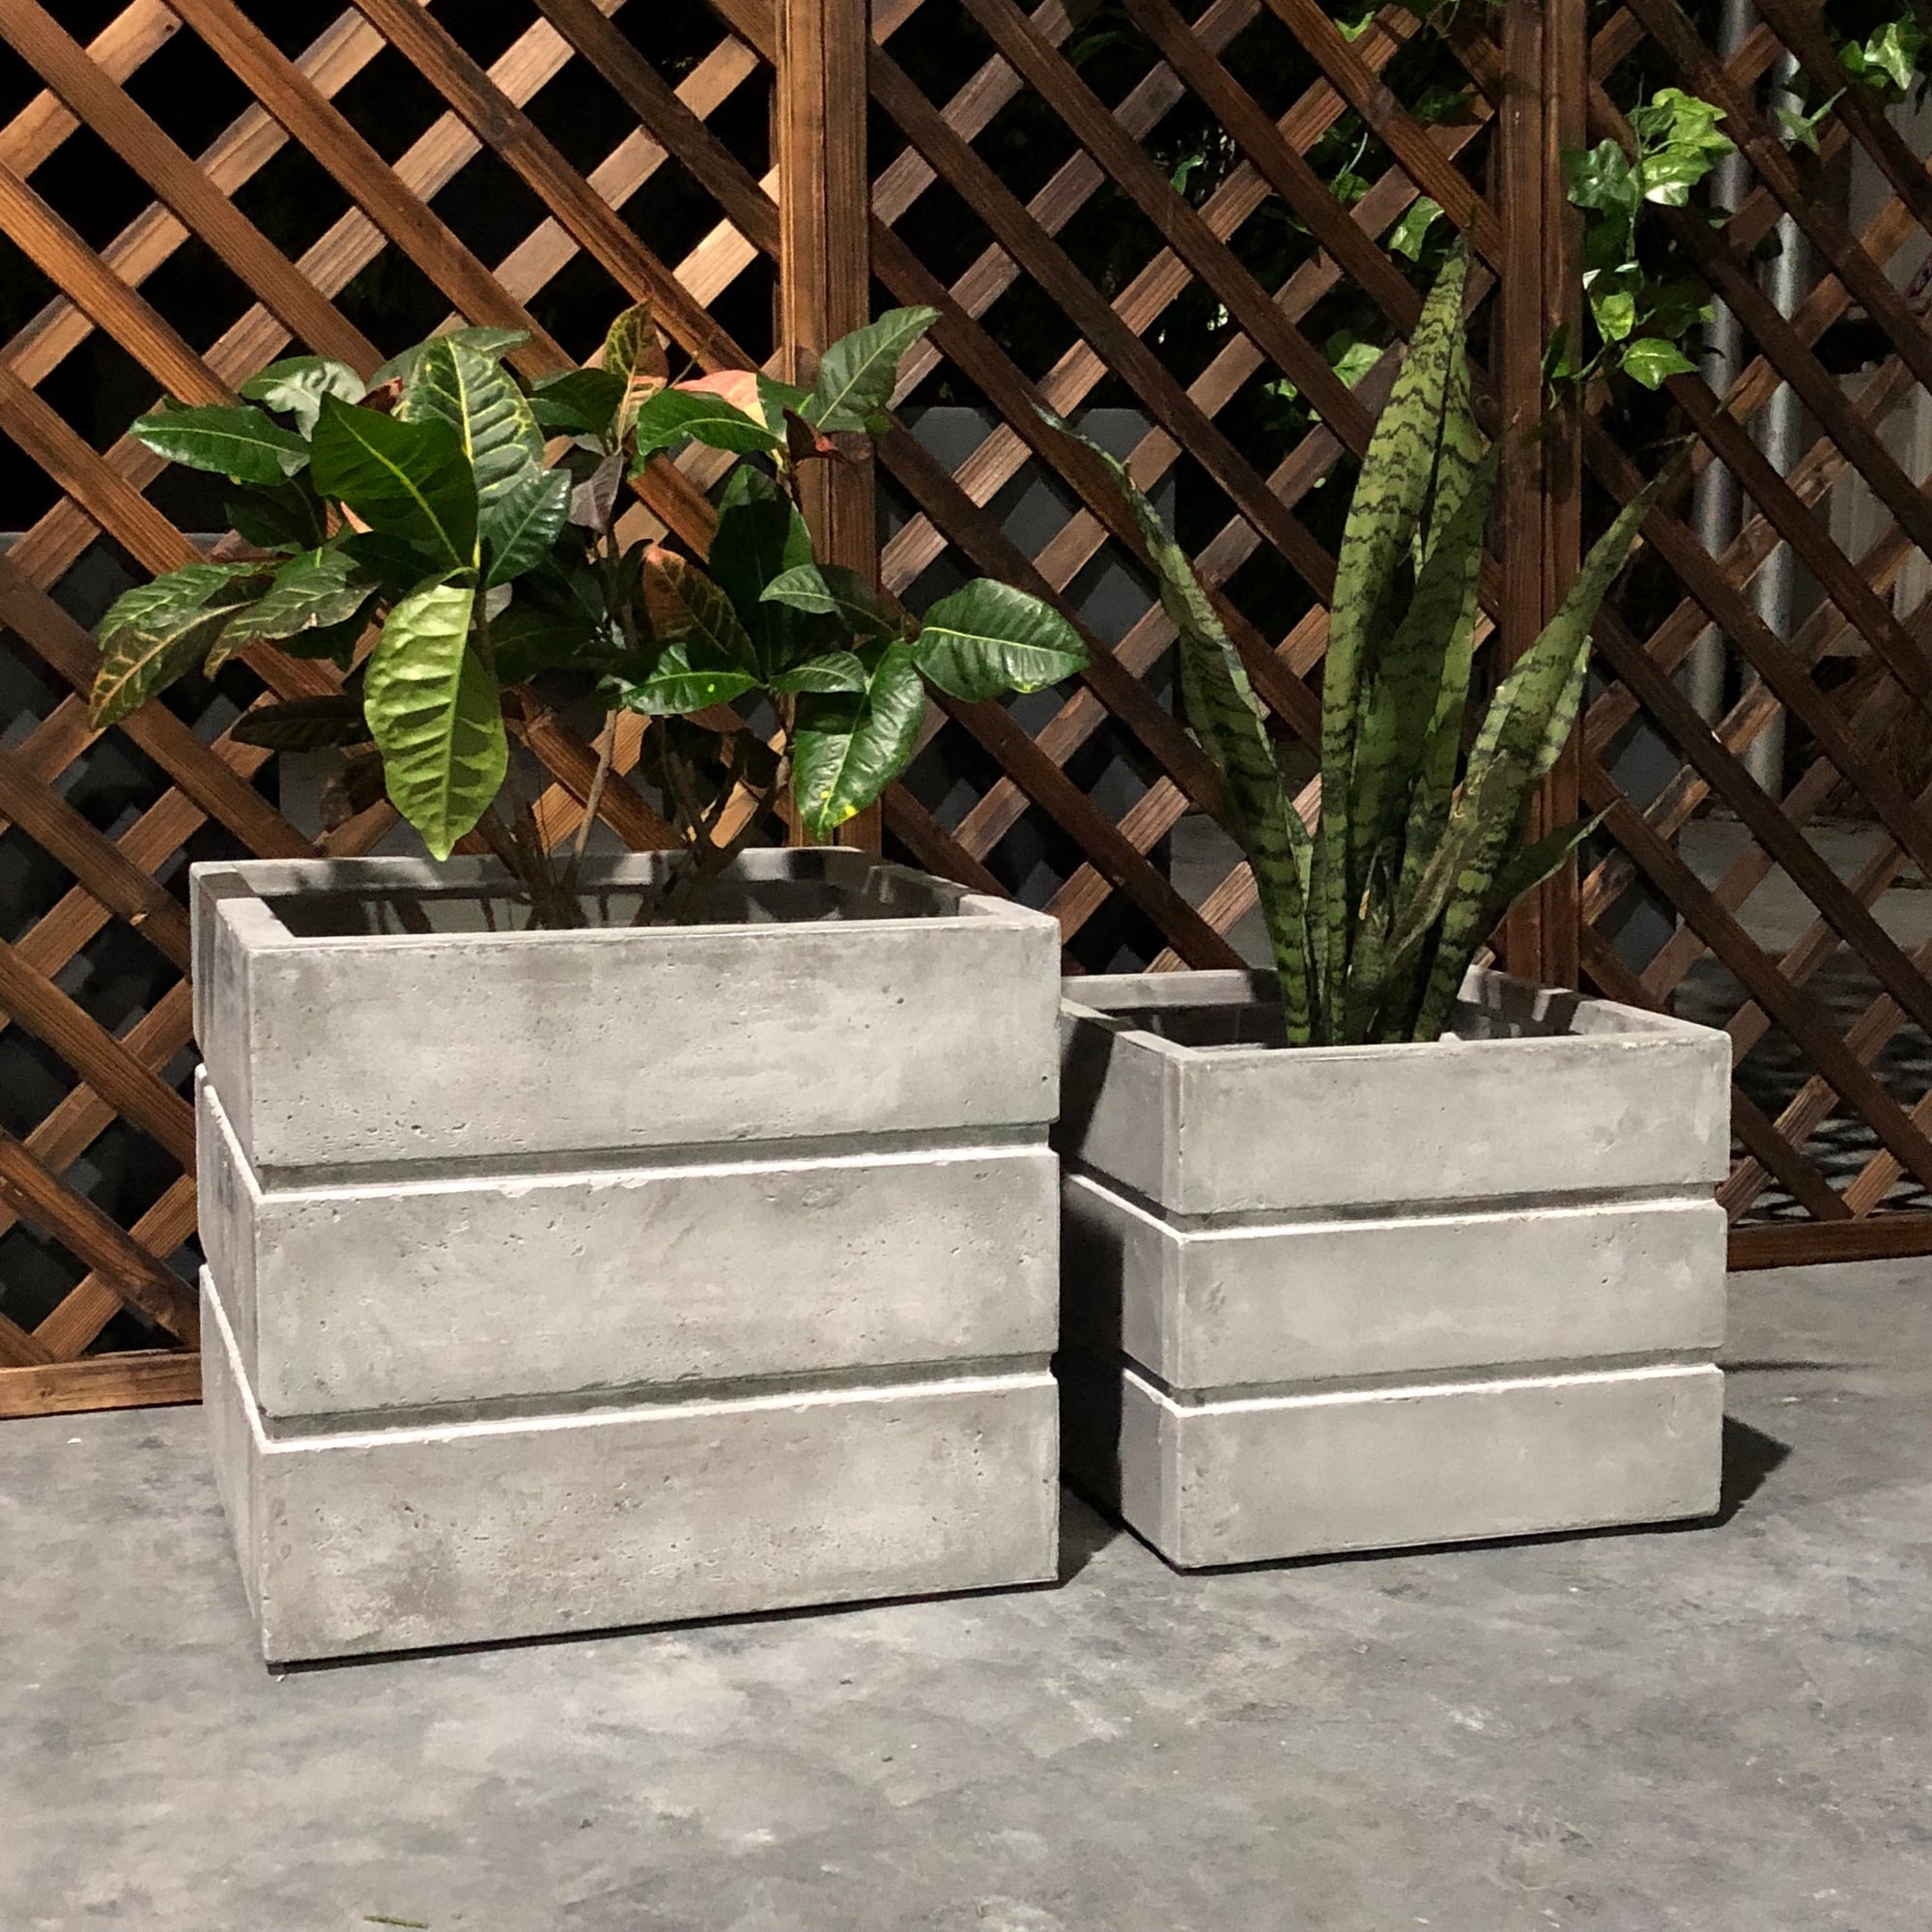 Durx-litecrete Lightweight Concrete Light Grey Crate Planter-Set of 2 - 17.7'x17.7'x15.2'